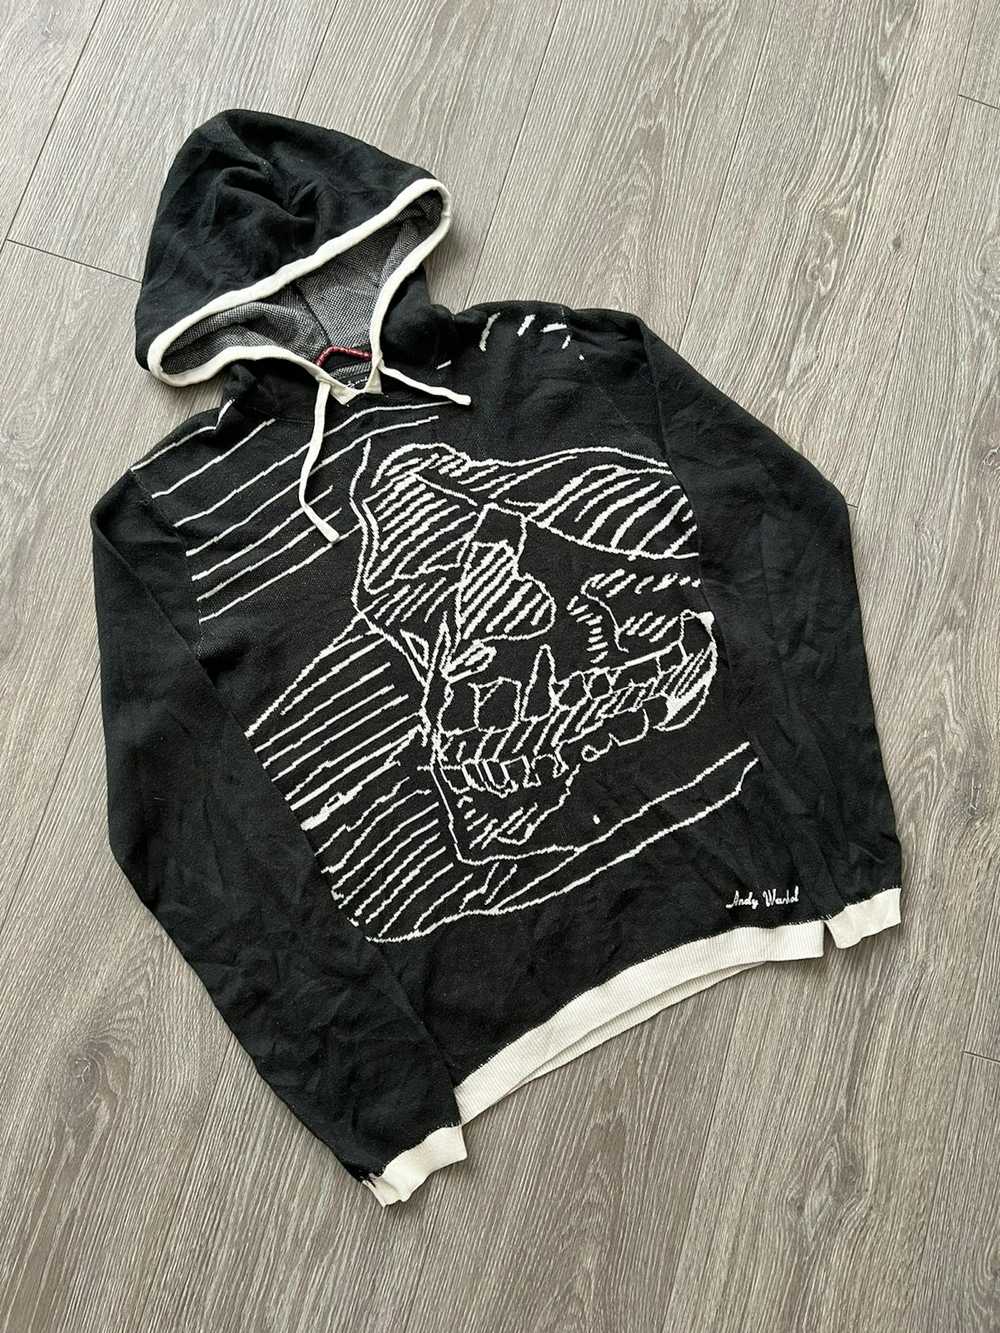 Andy Warhol Andy Warhol Sweater - image 4